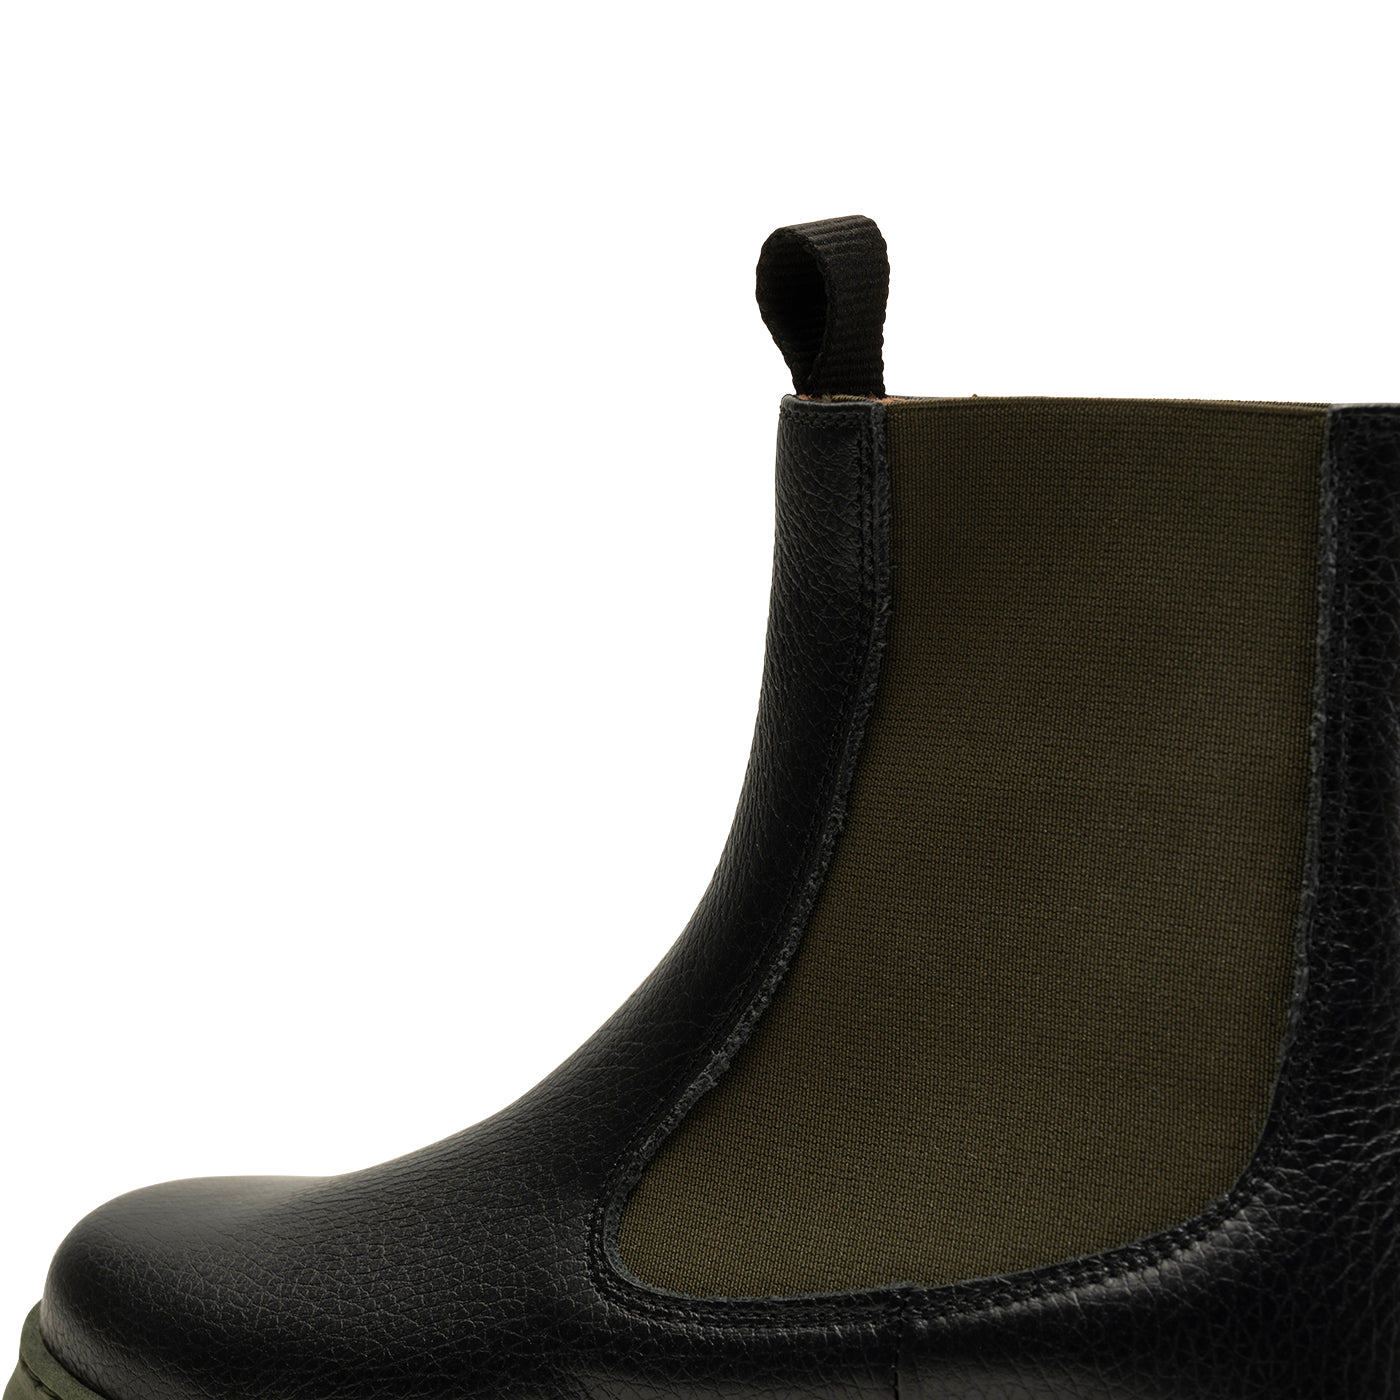 SHOE THE BEAR WOMENS Tove chelsea boot leather Chelsea Boots 878 BLACK/KHAKI